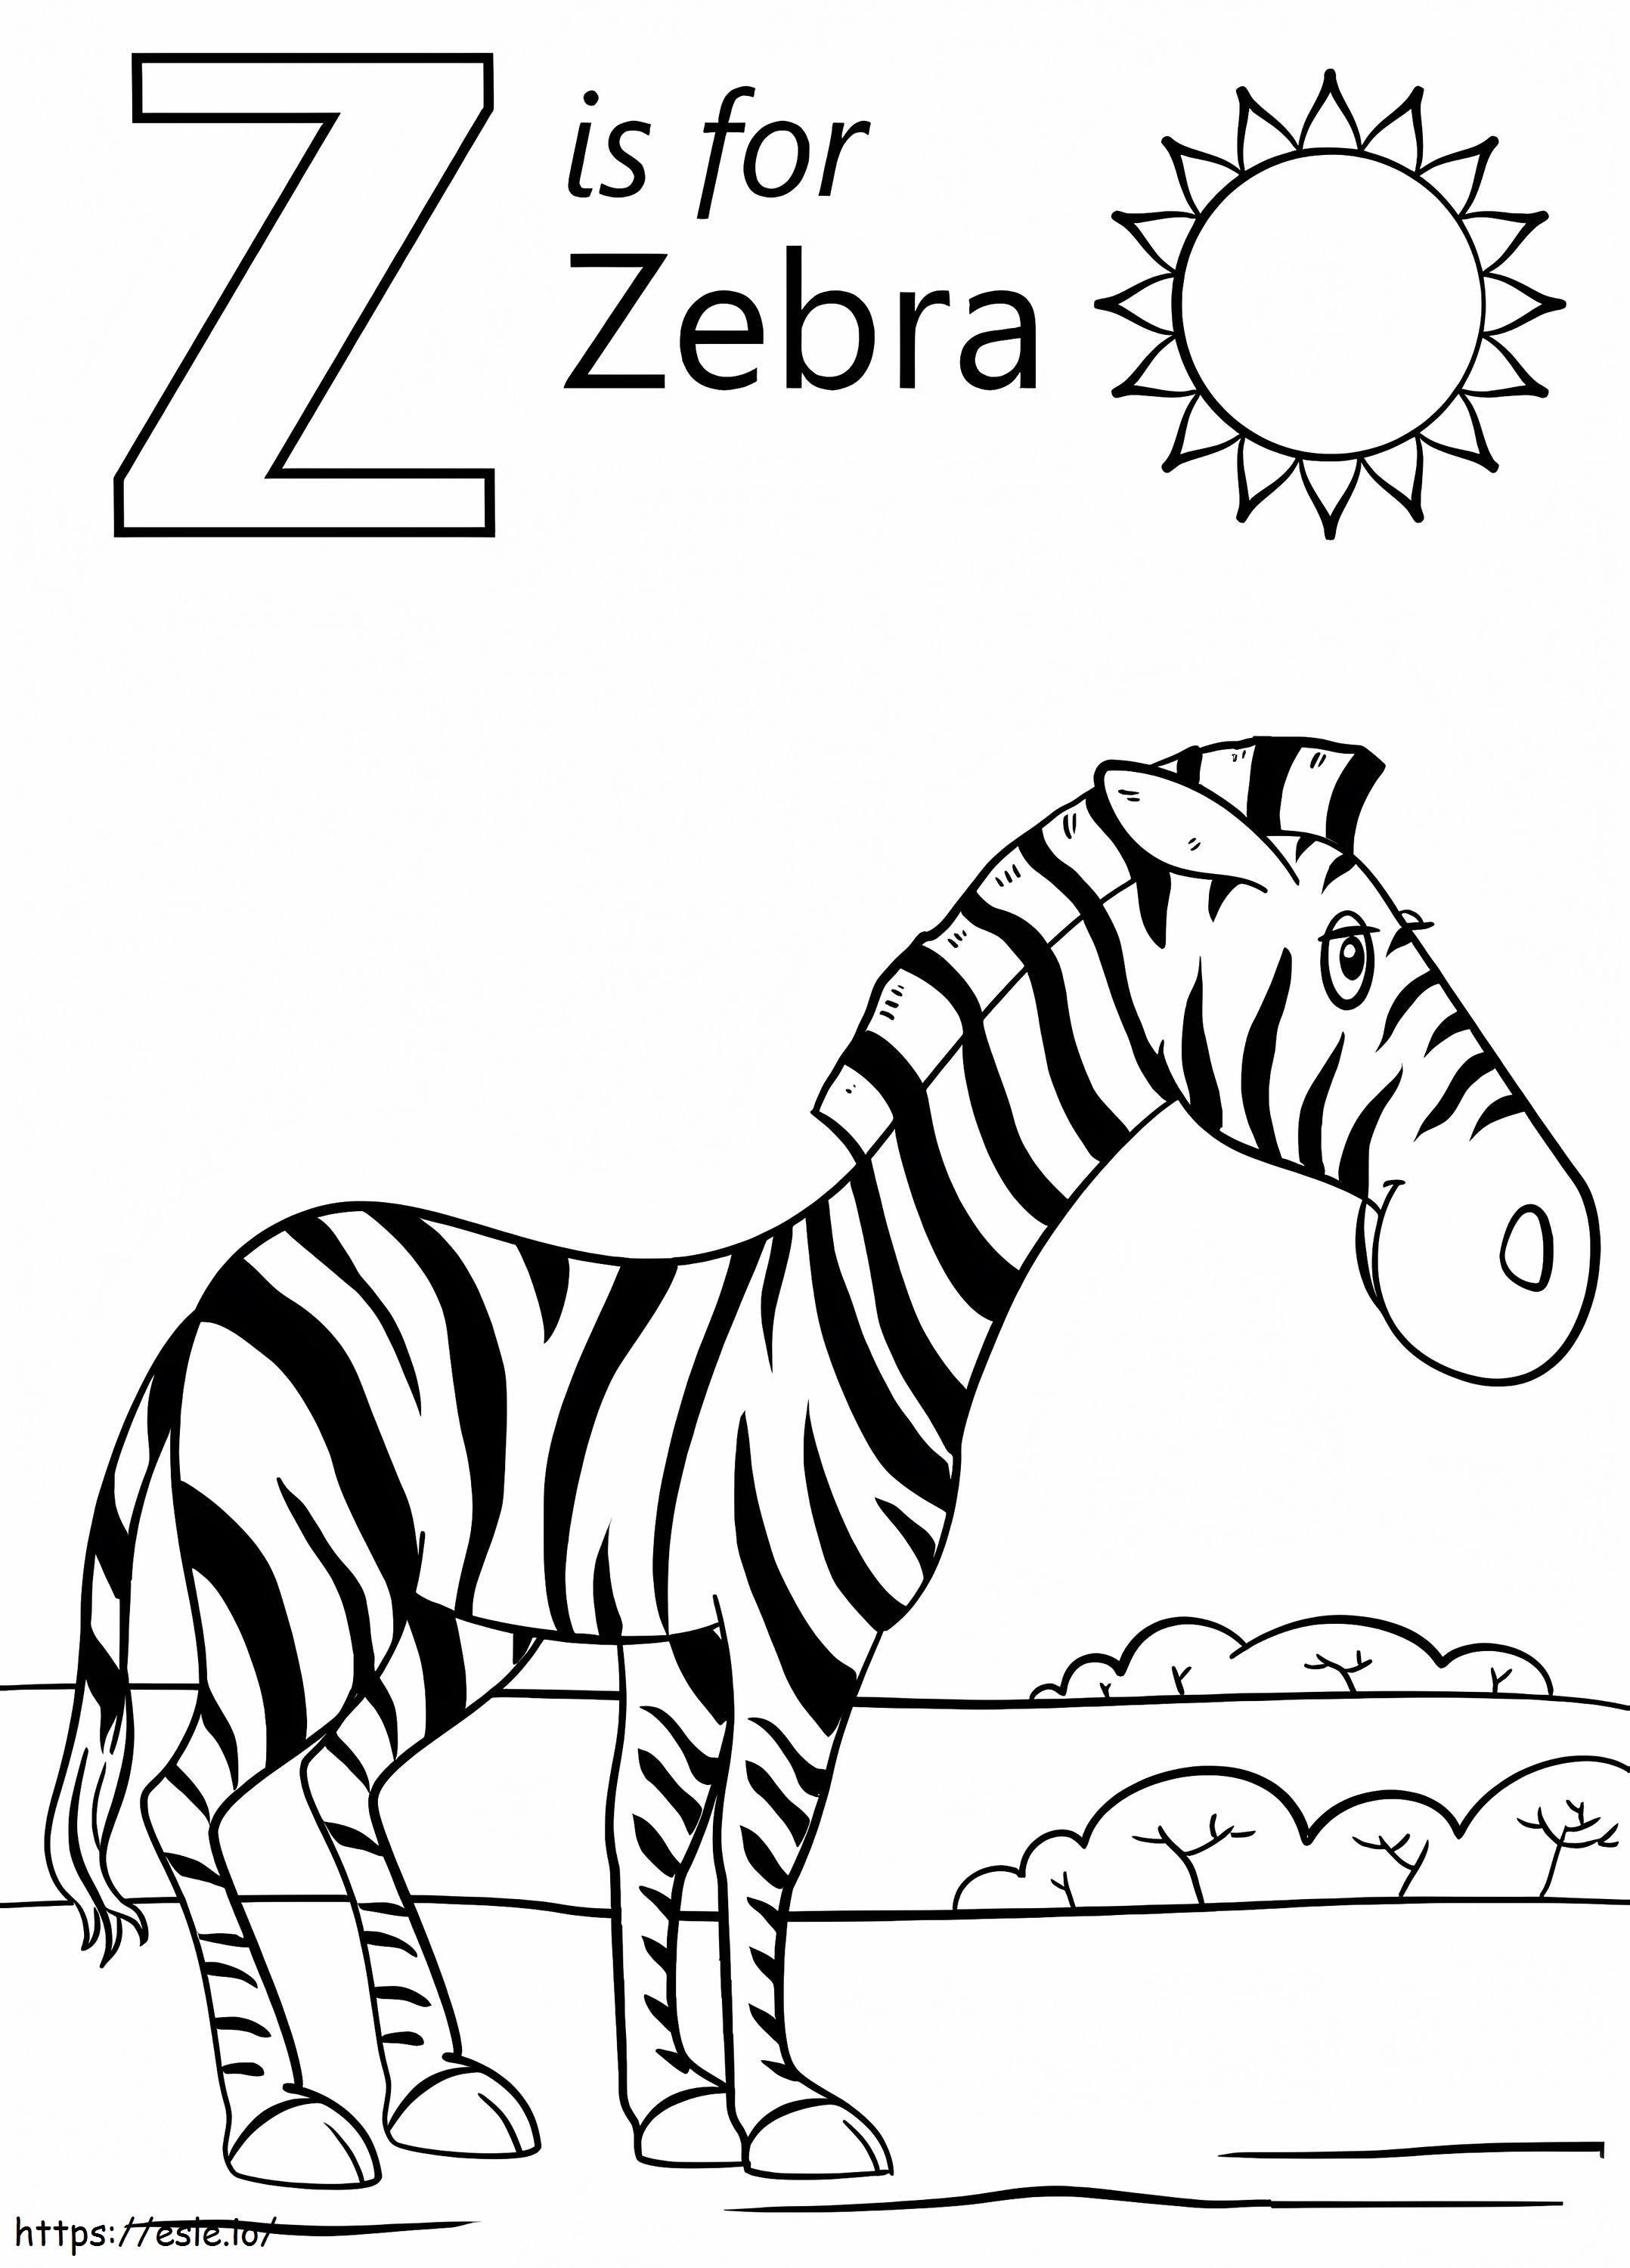 Zebra Letra Z para colorir